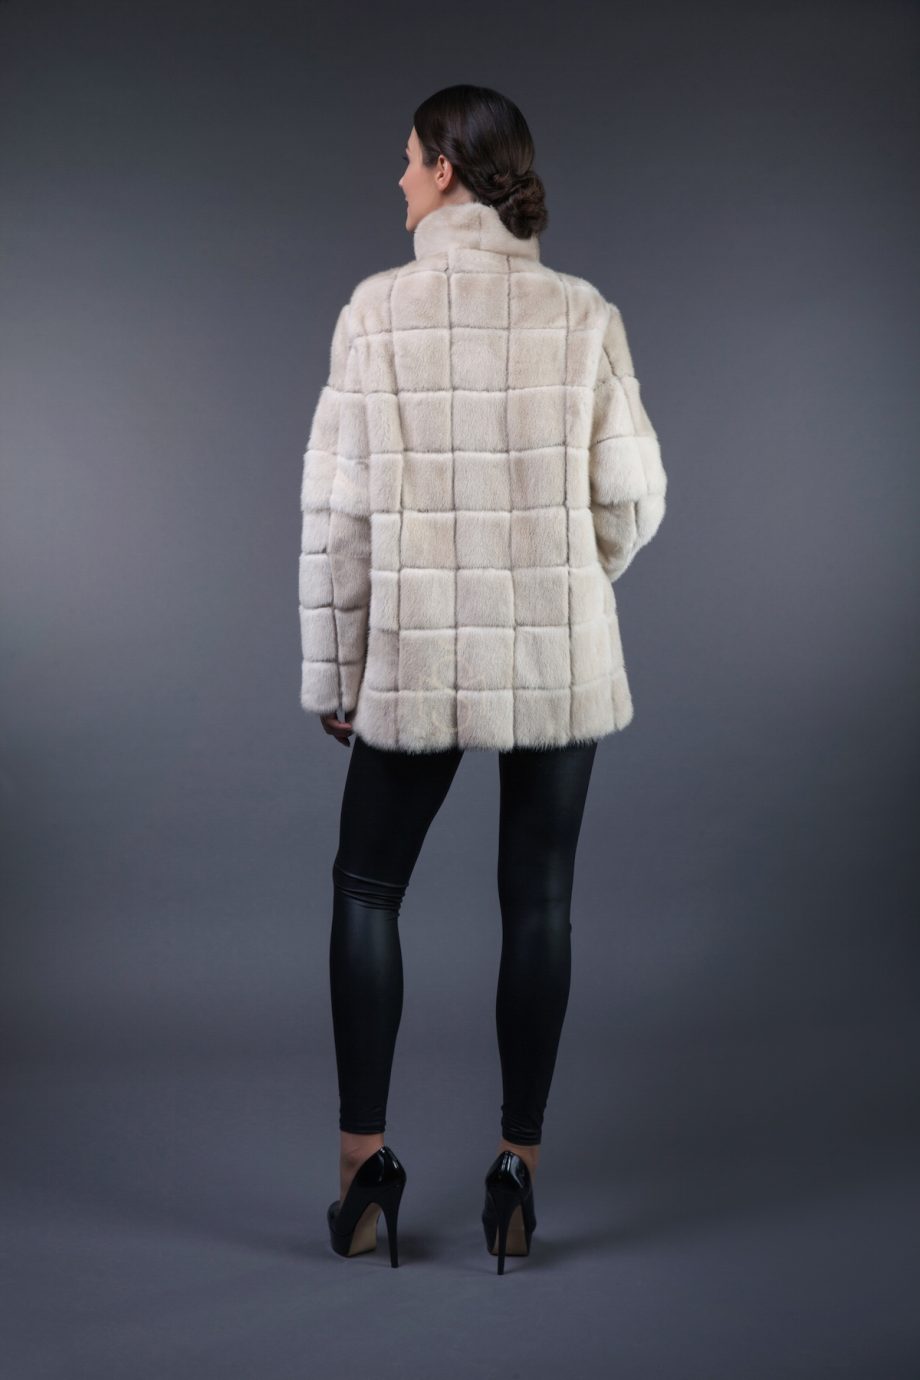 Mink fur coat – vest